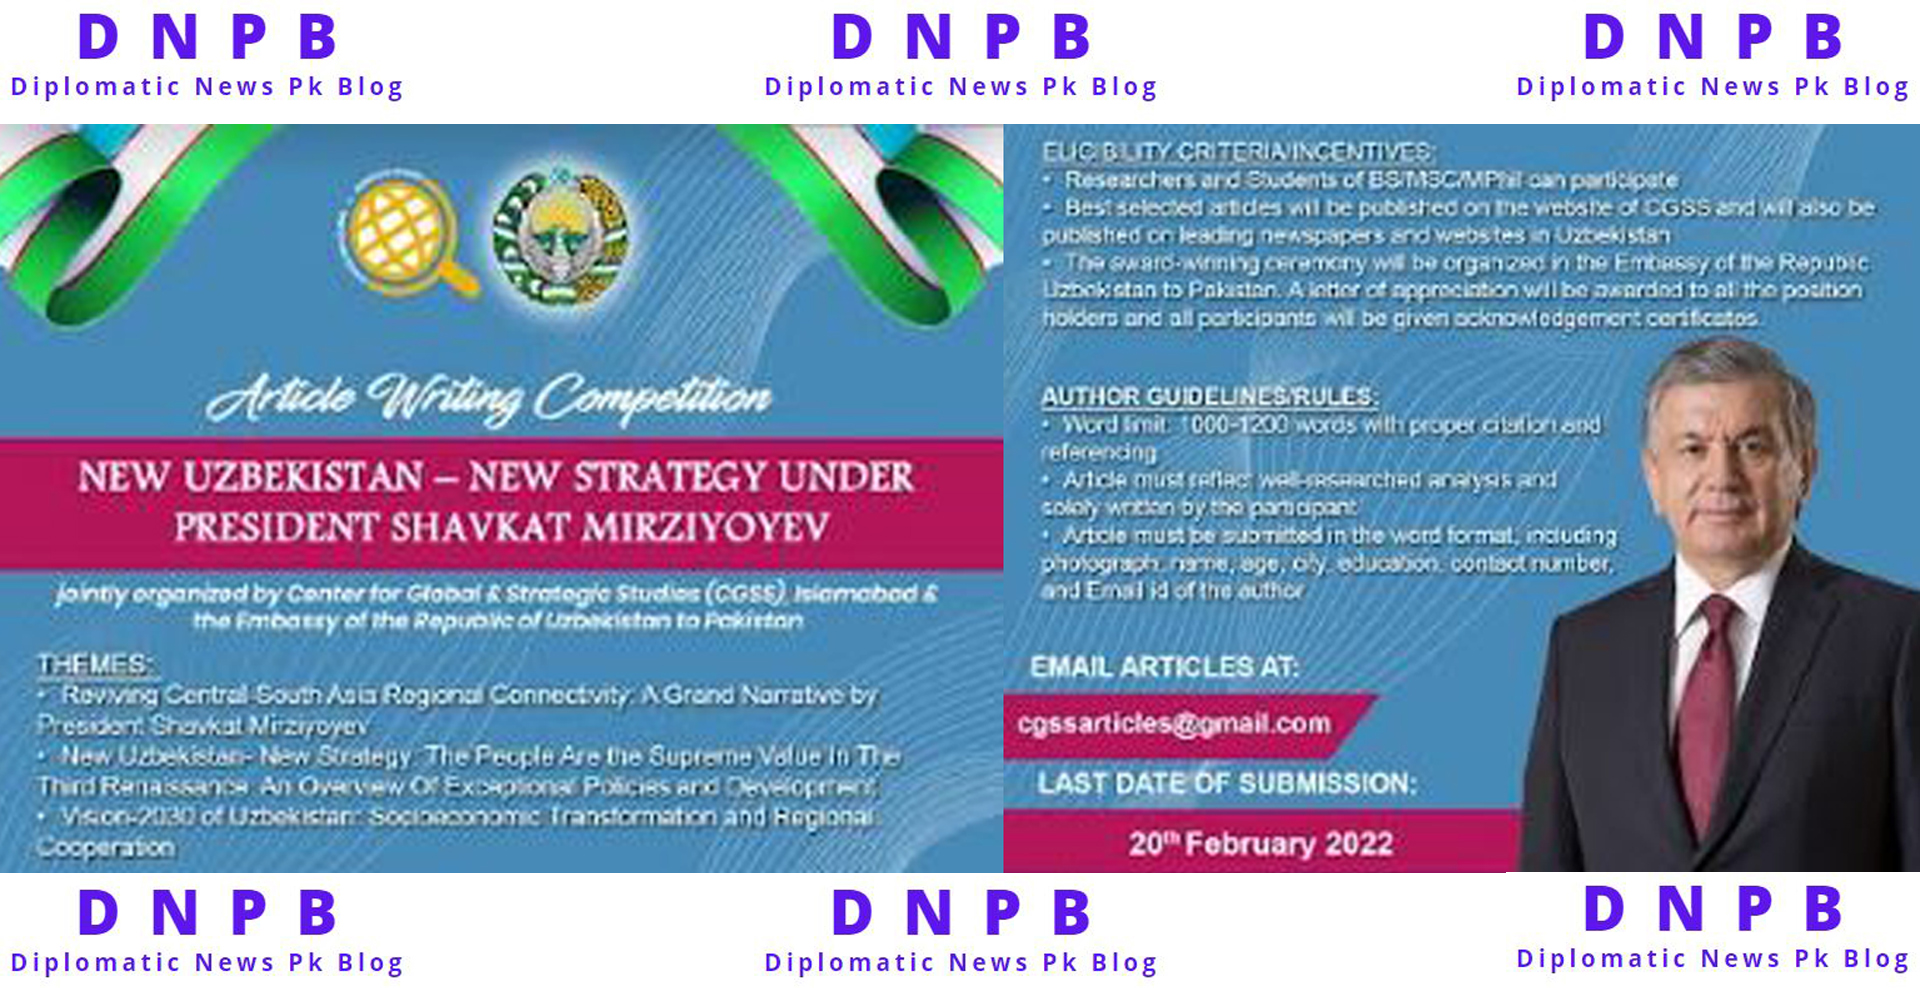 Article Writing Competition, "New Uzbekistan – New Strategy under President Shavkat Mirziyoyev "